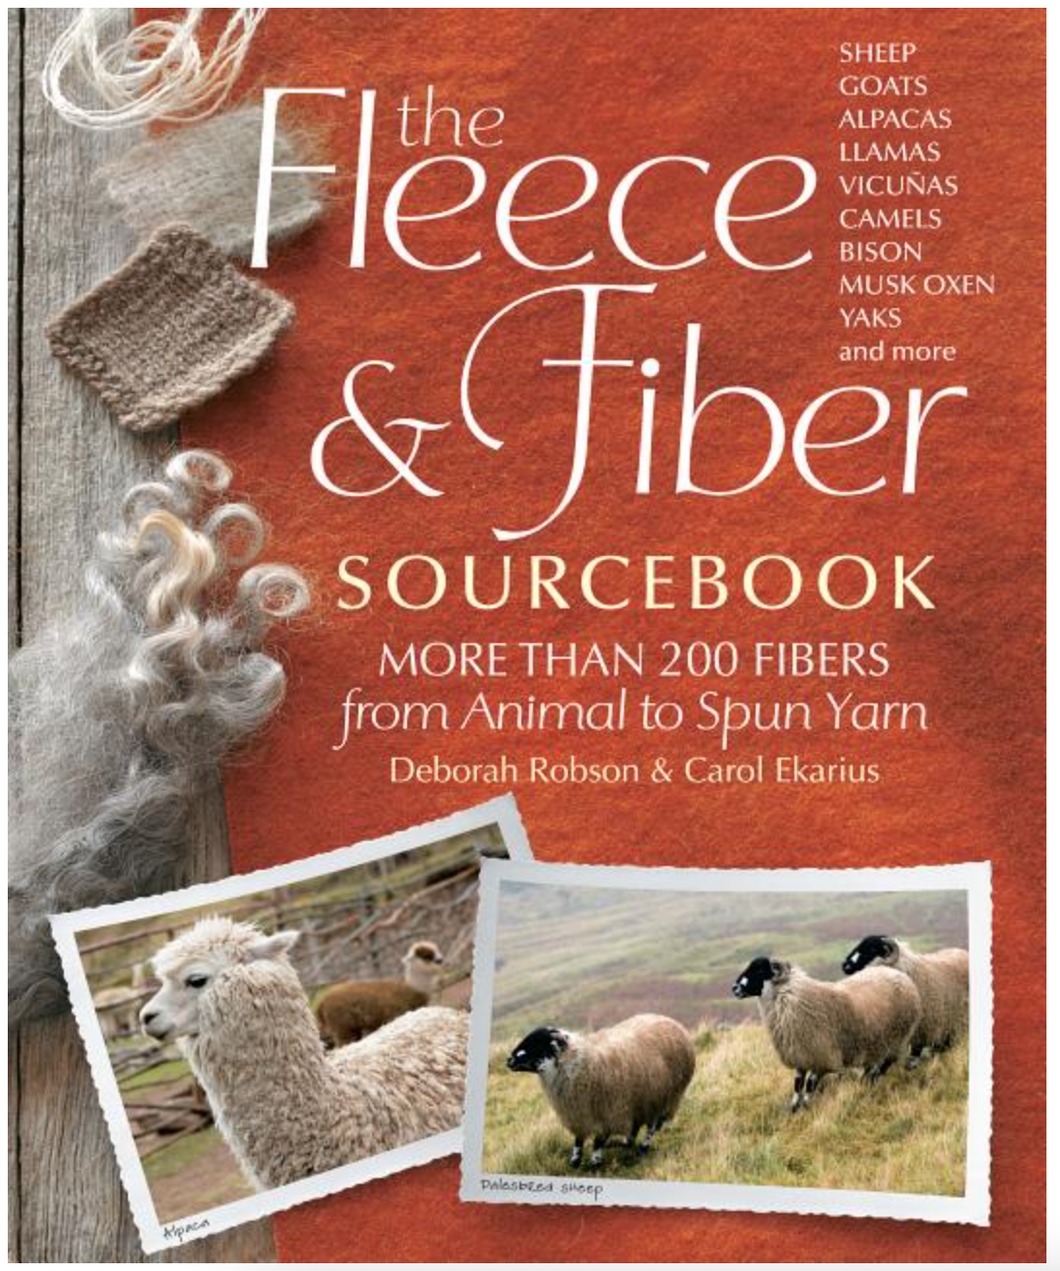 The Fleece & Fiber Sourcebook by Deb Robson & Carol Ekarius